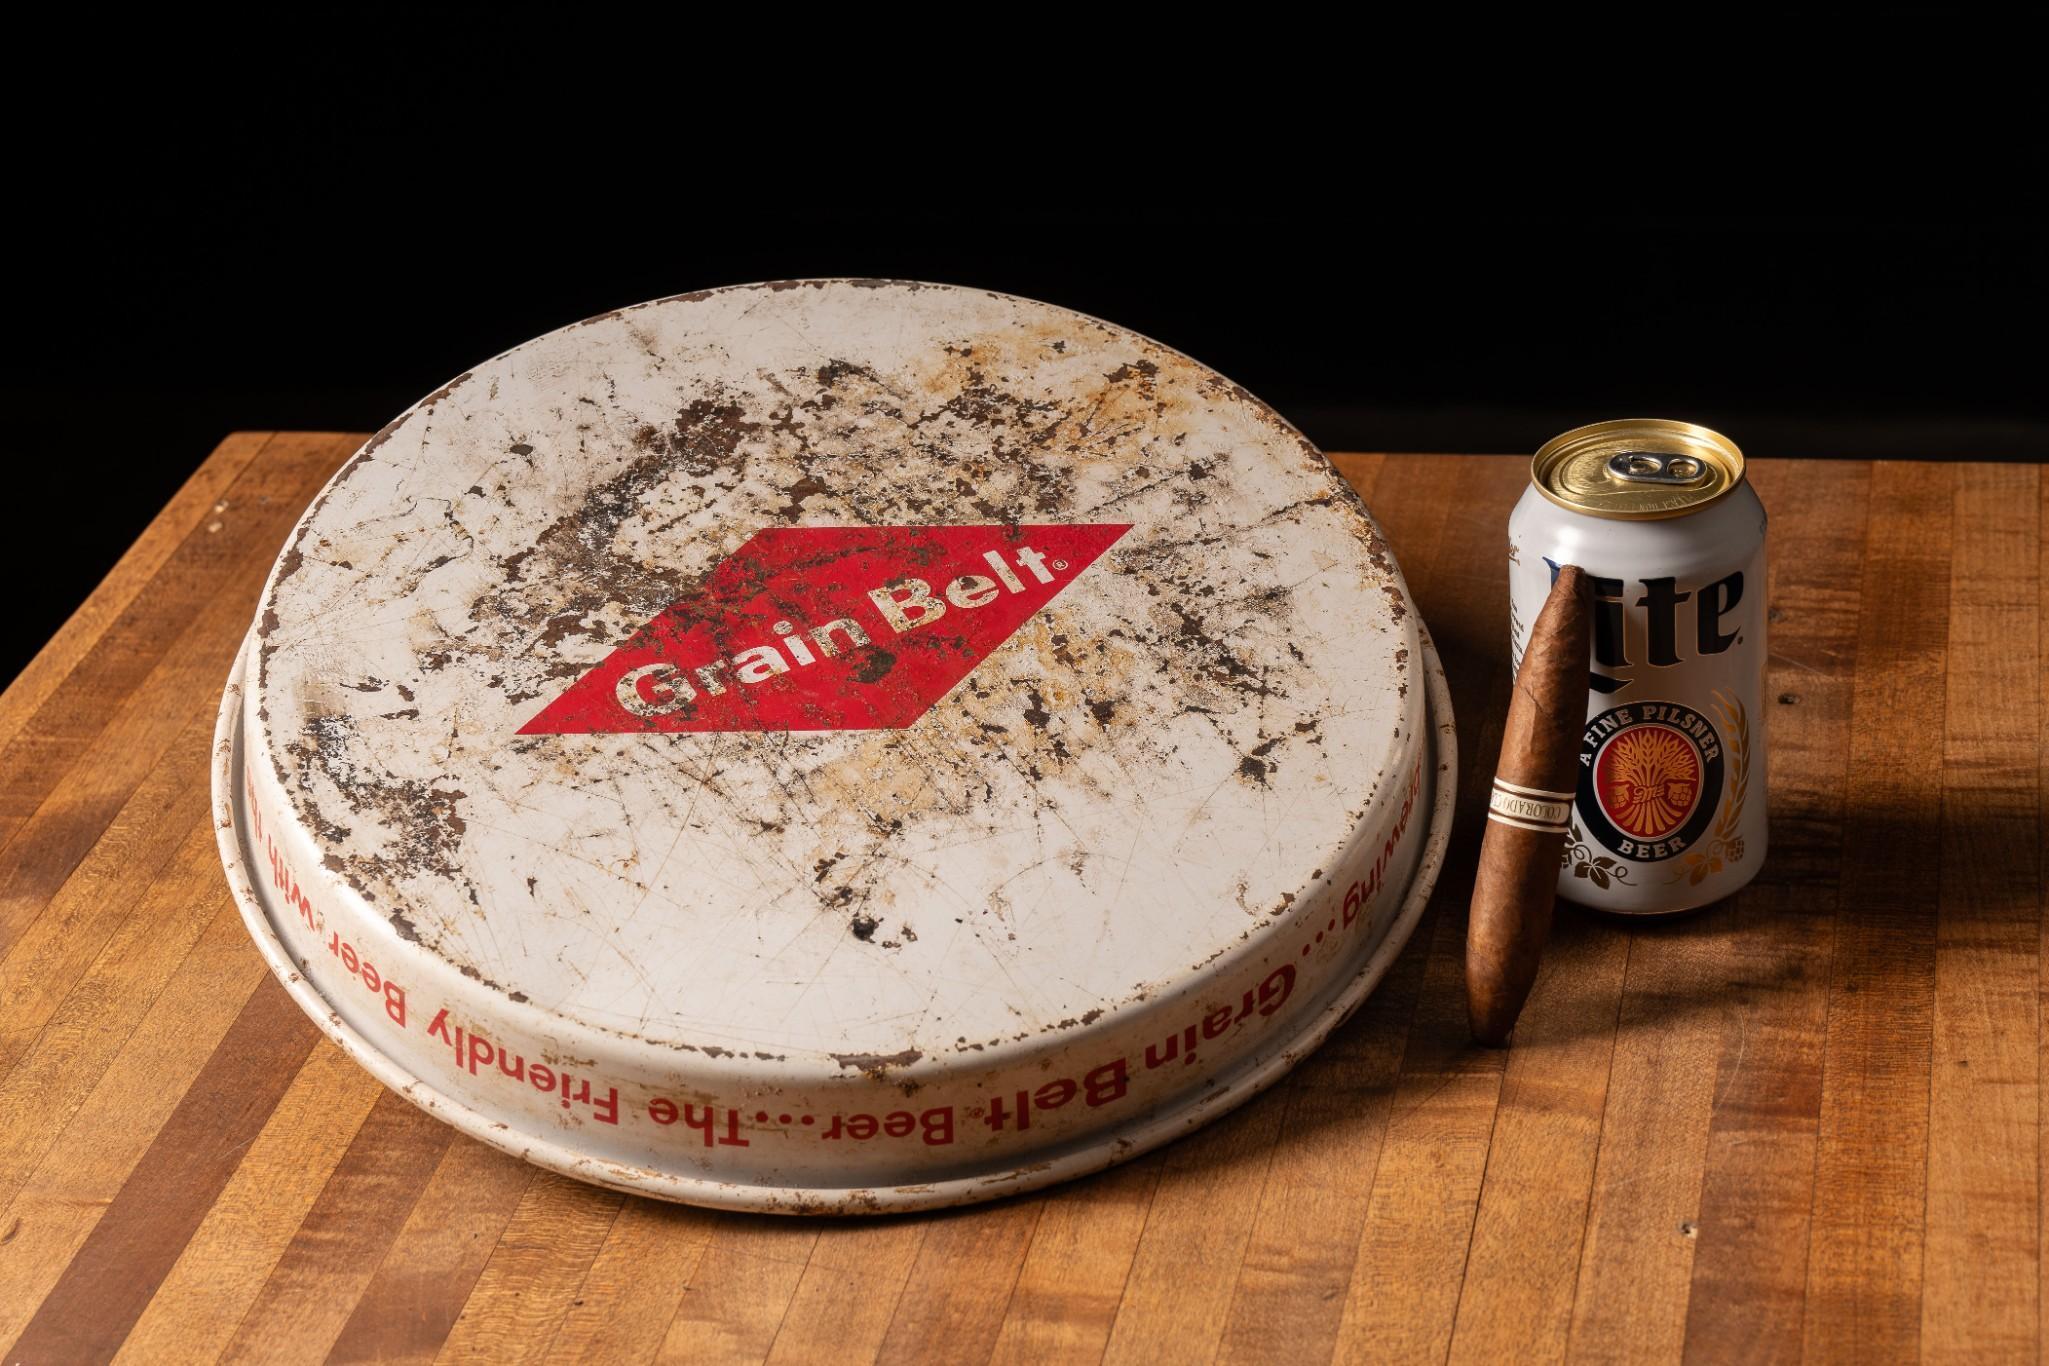 Vintage Grain Belt Beer Serving Tray